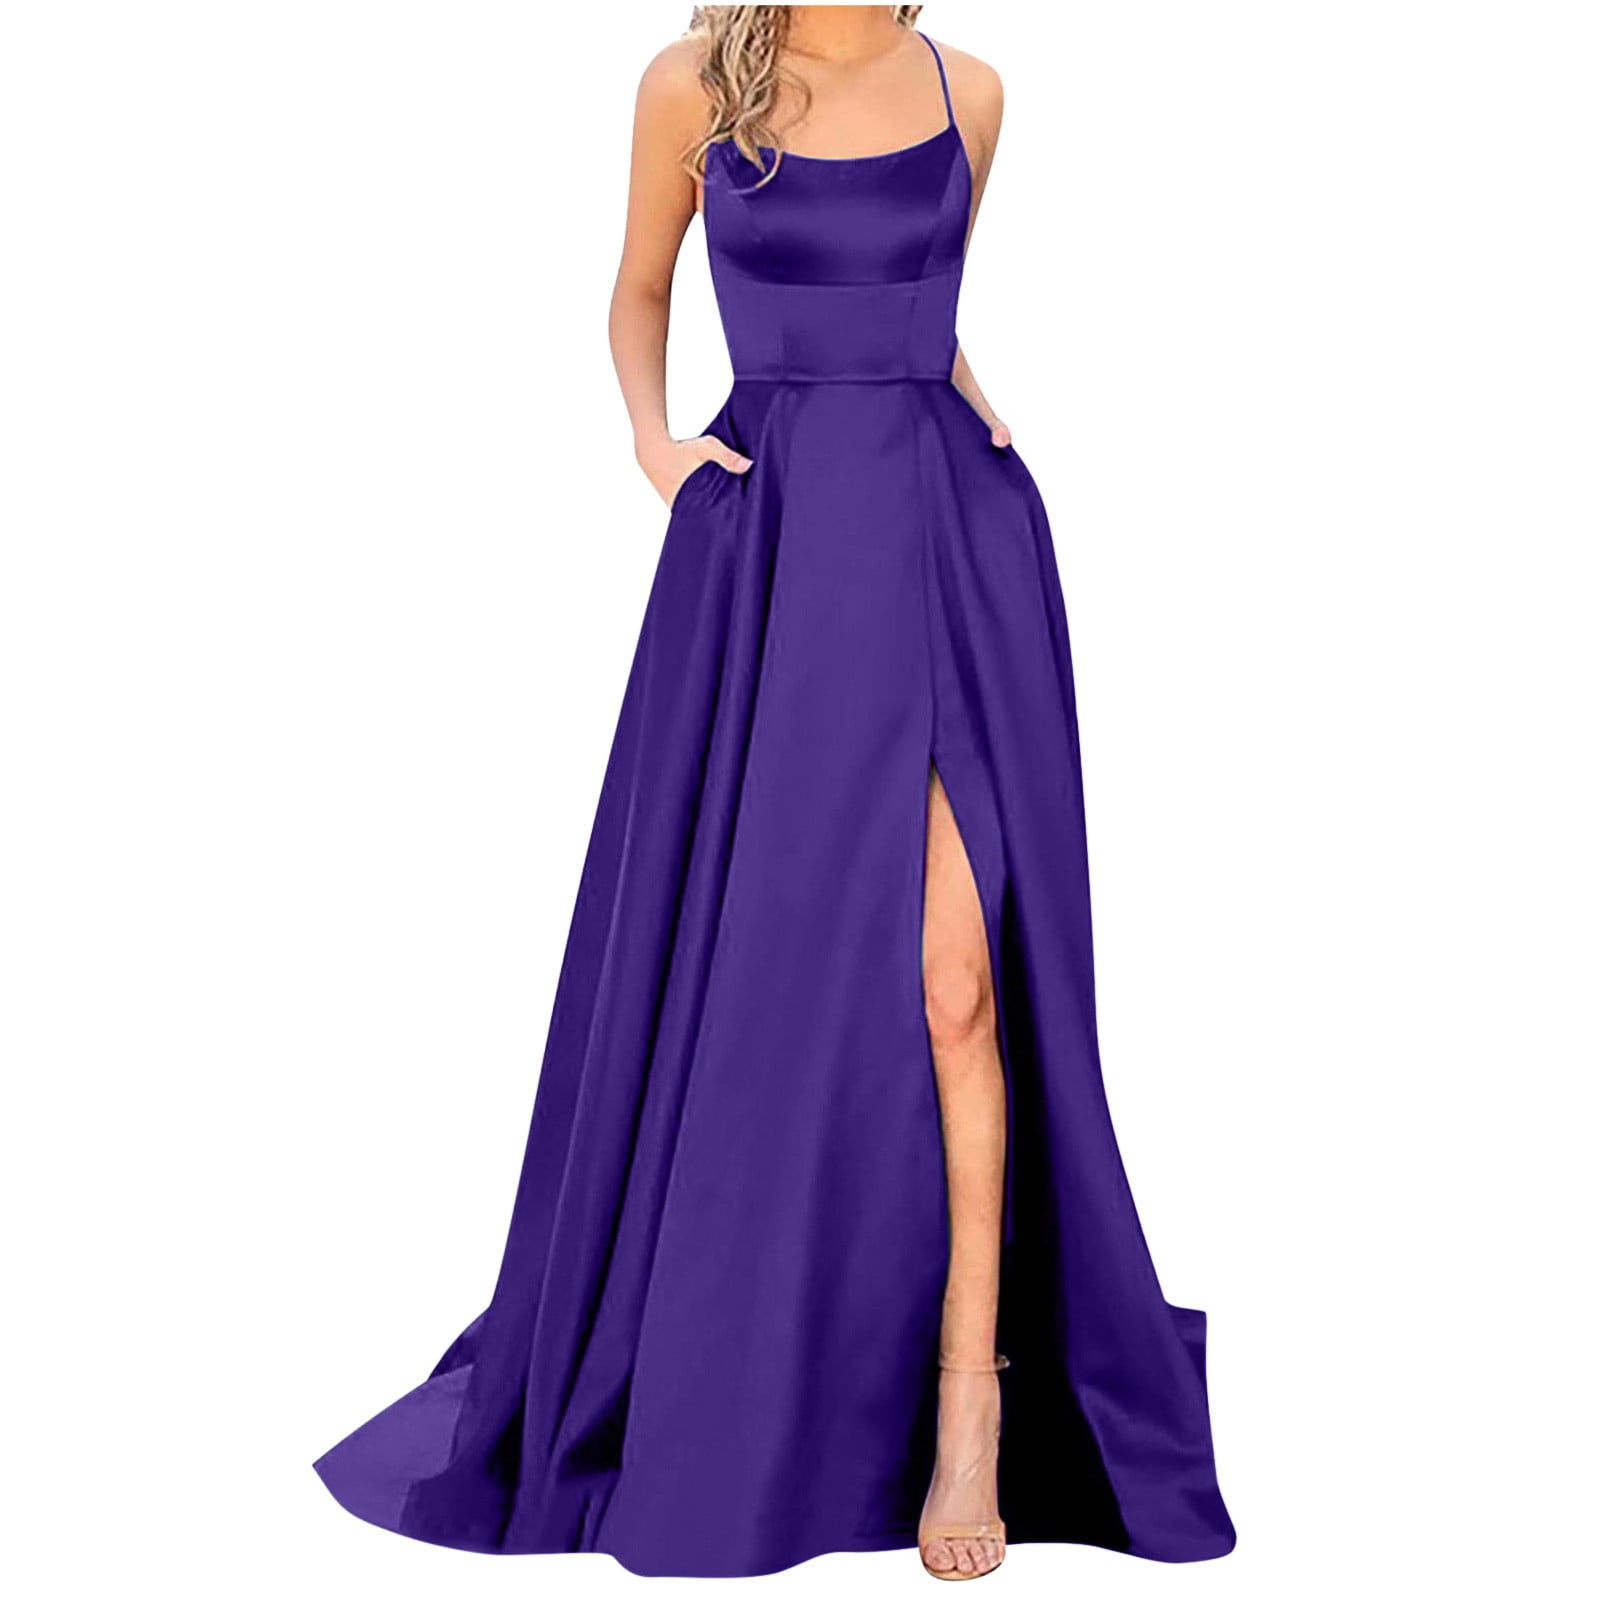 HAND DYED GOLDTONE 80's-90's Wedding Dress Ball Gown Long Sleeve Train  Medium1 $139.50 - PicClick